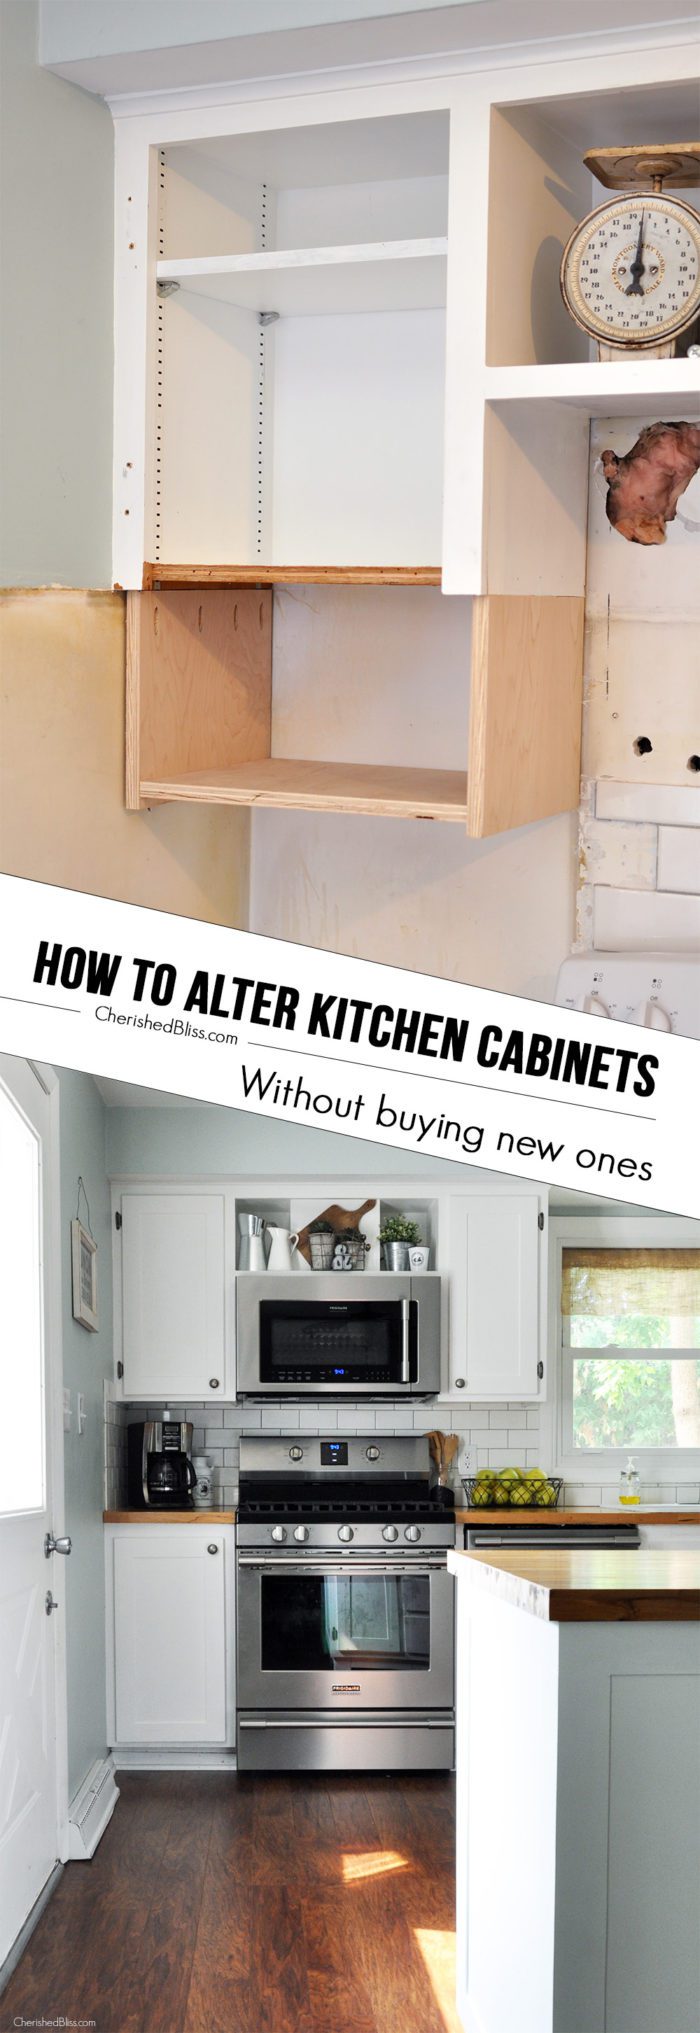 kitchen hack: diy shaker style cabinets - cherished bliss